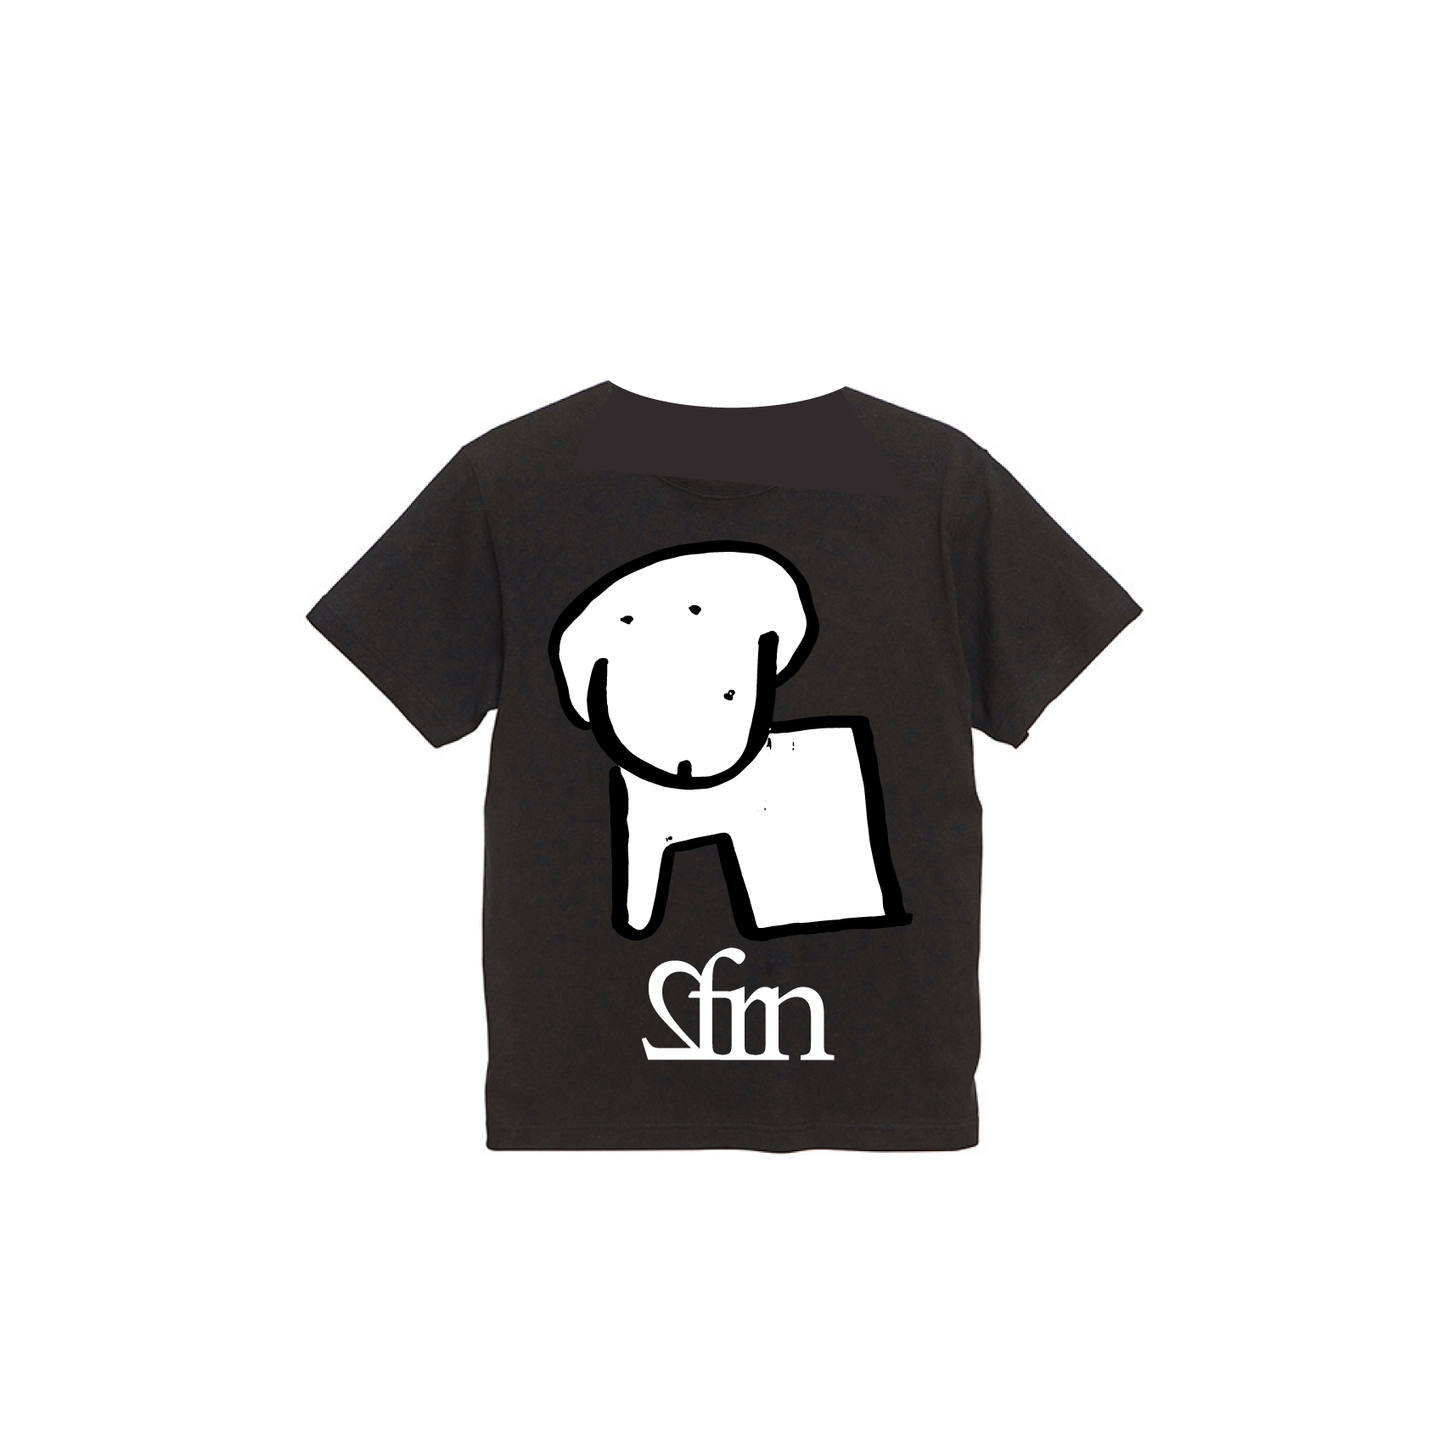 SFRN T-Shirt 犬 black